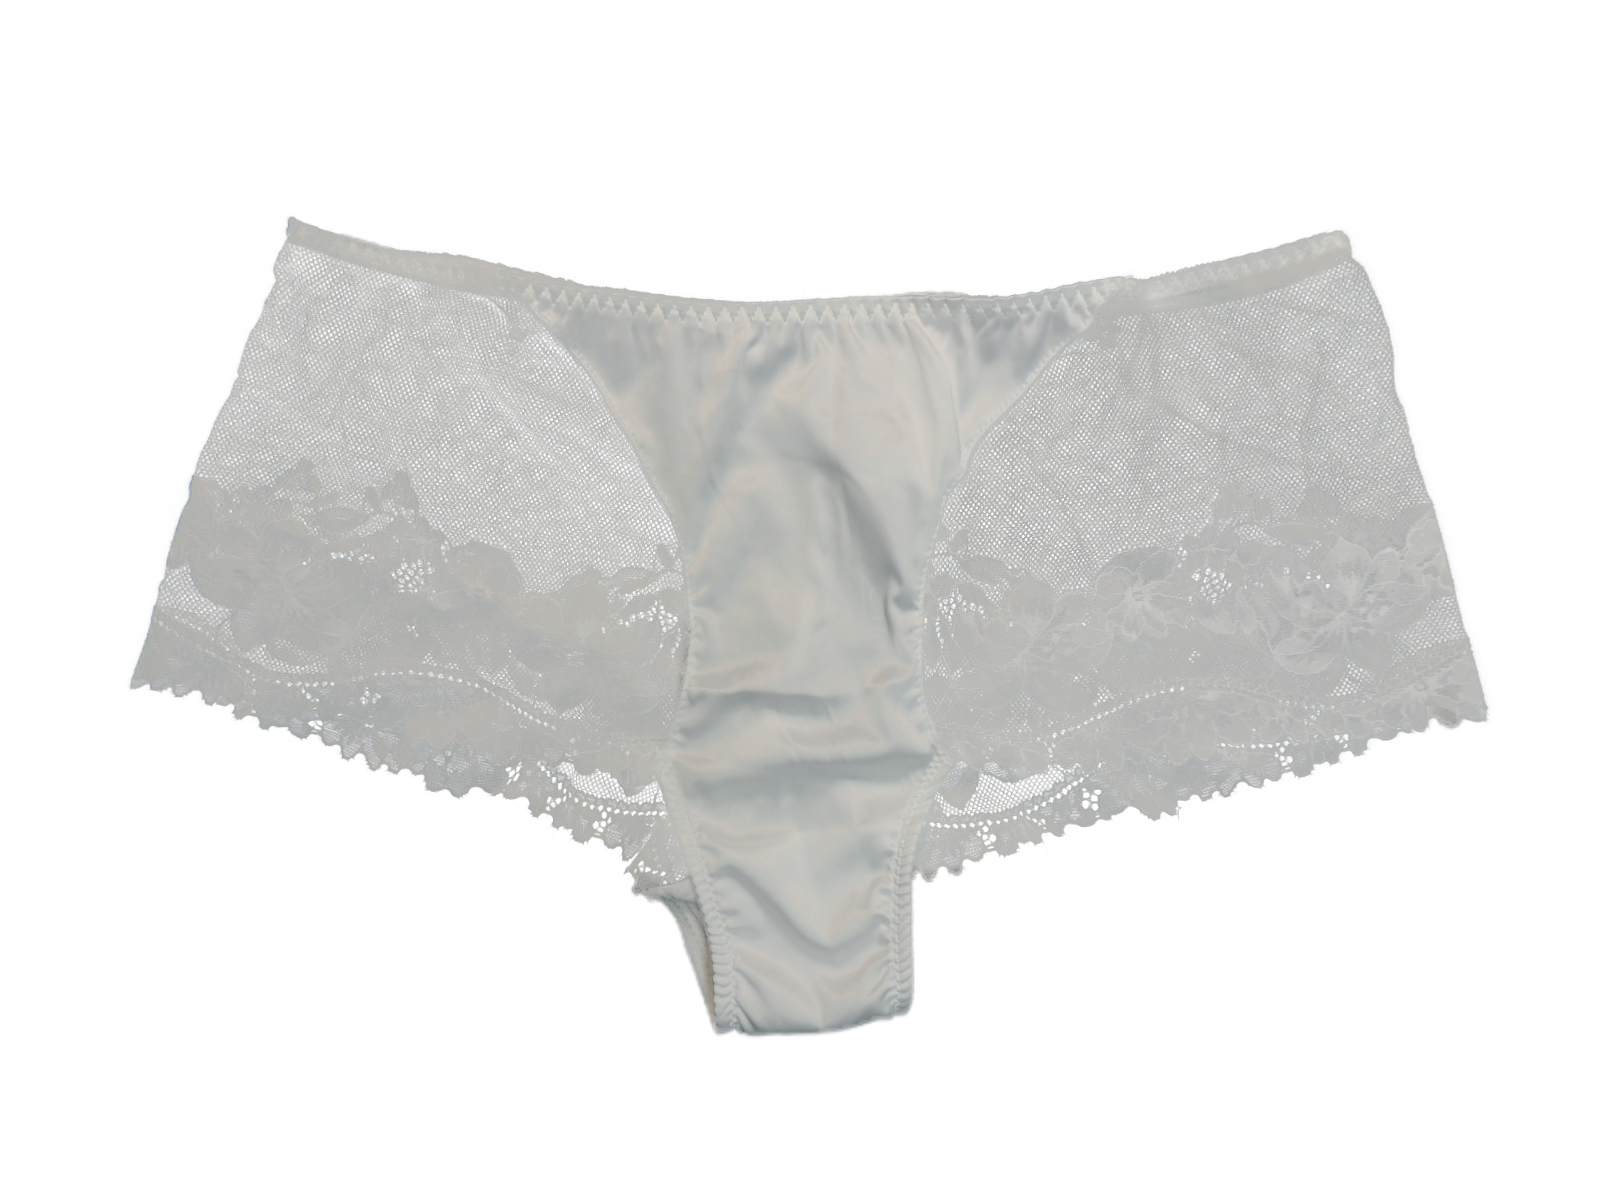 Soft Lace Brazilian Panties by Leilieve from Italy  Di Moda European  Lingerie Toronto – Di Moda Lingerie